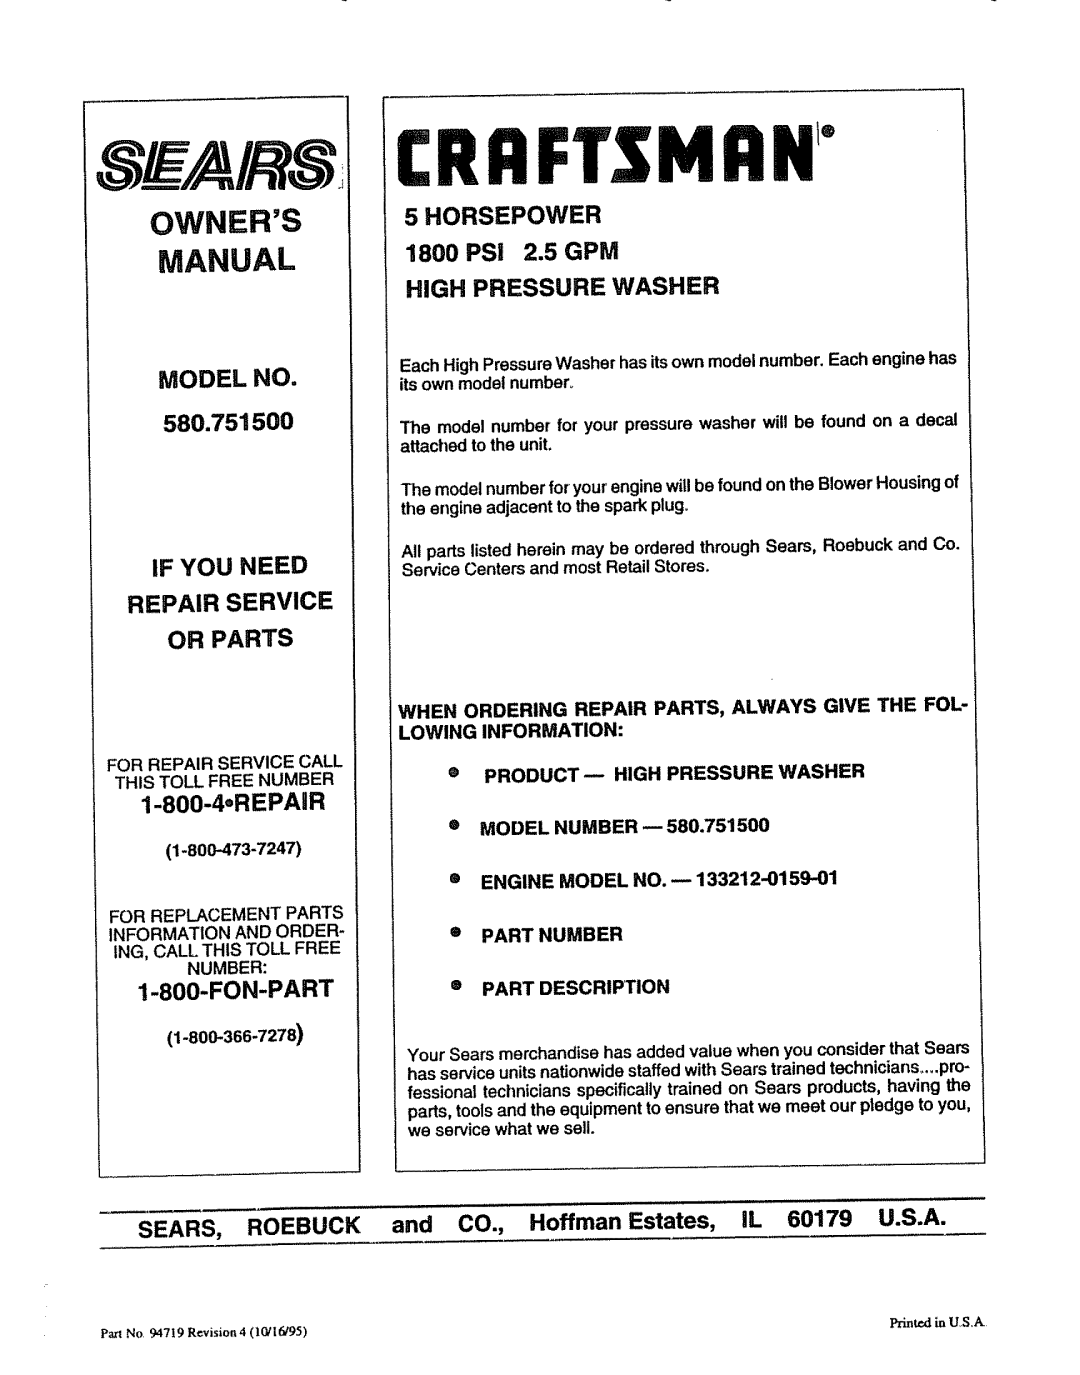 Sears Owners Manual, MODEL NO 580.751500, If You Need Repair Service Or Parts, 1-800-4,REPAIR, Fon-Part, CRRFrSMRN 